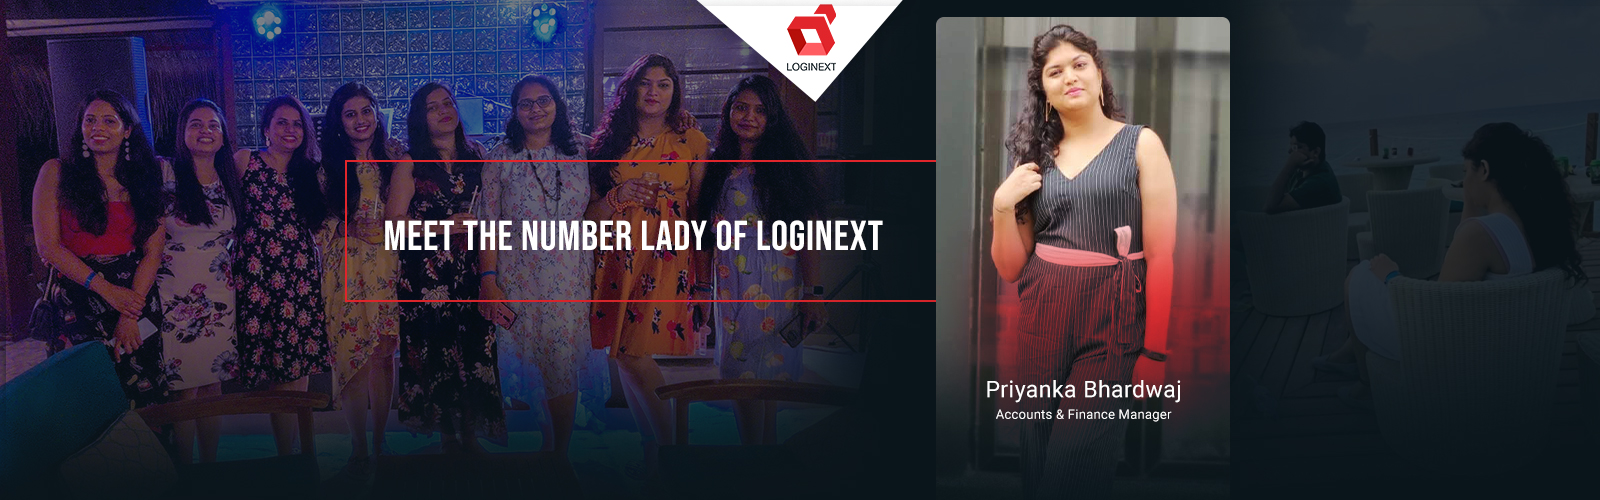 Meet the number lady at LogiNext, Priyanka Bhardwaj